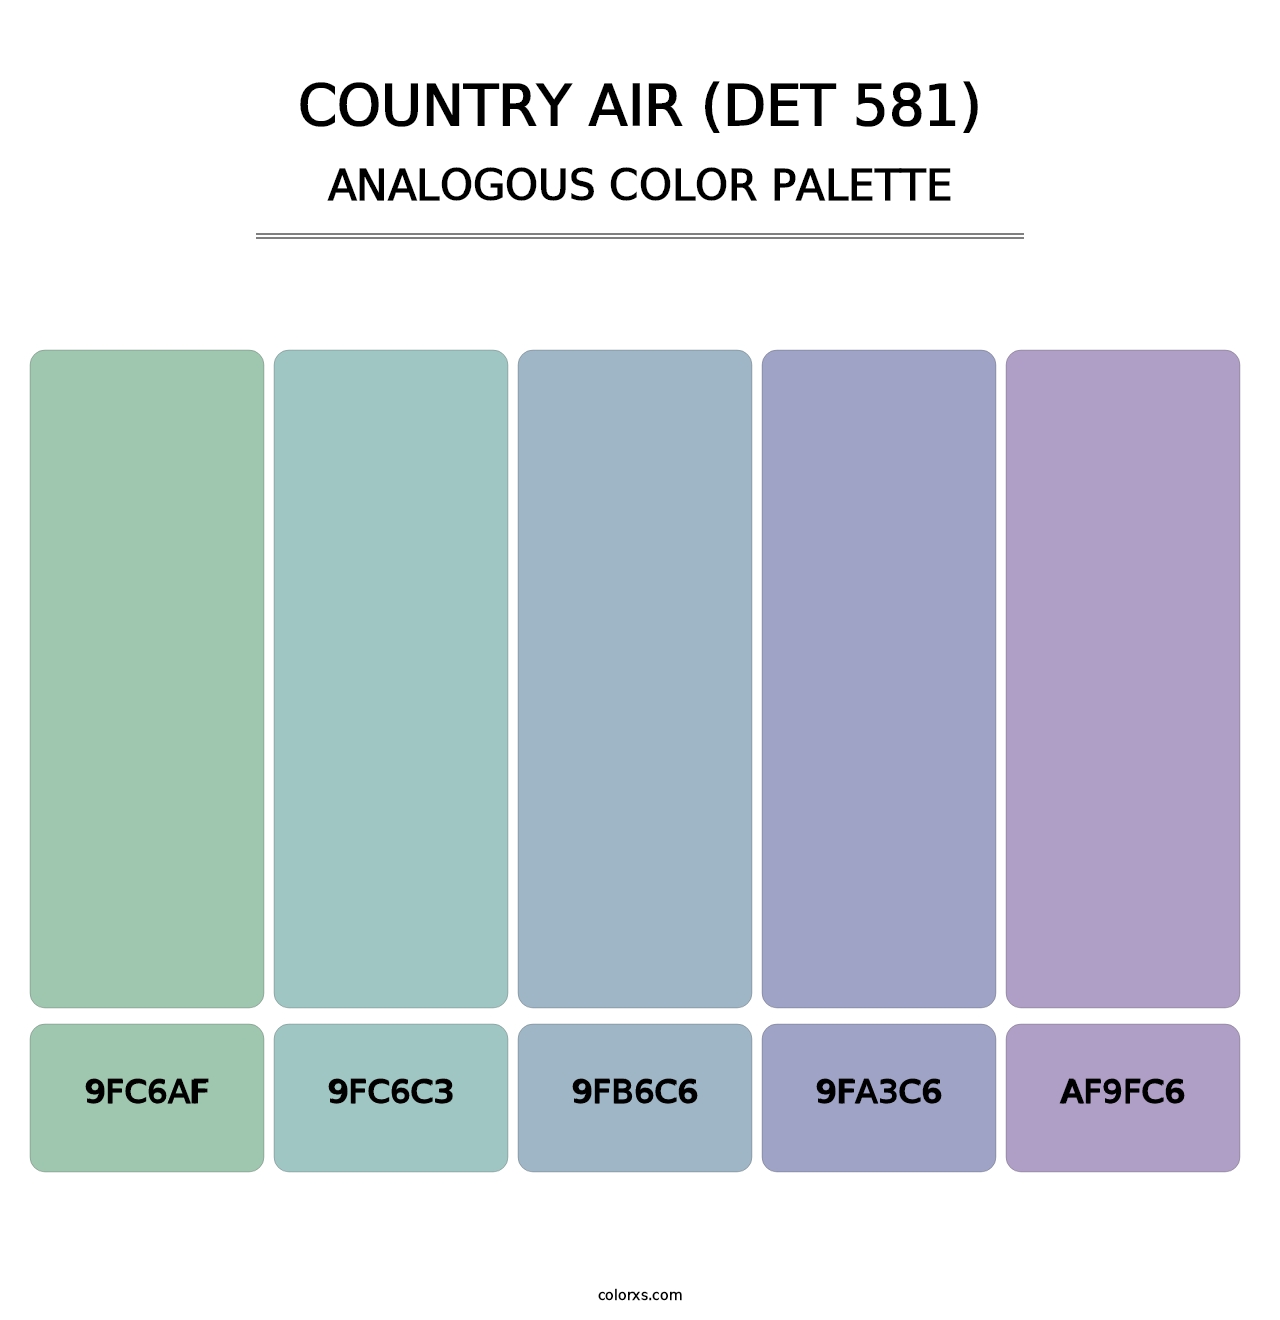 Country Air (DET 581) - Analogous Color Palette